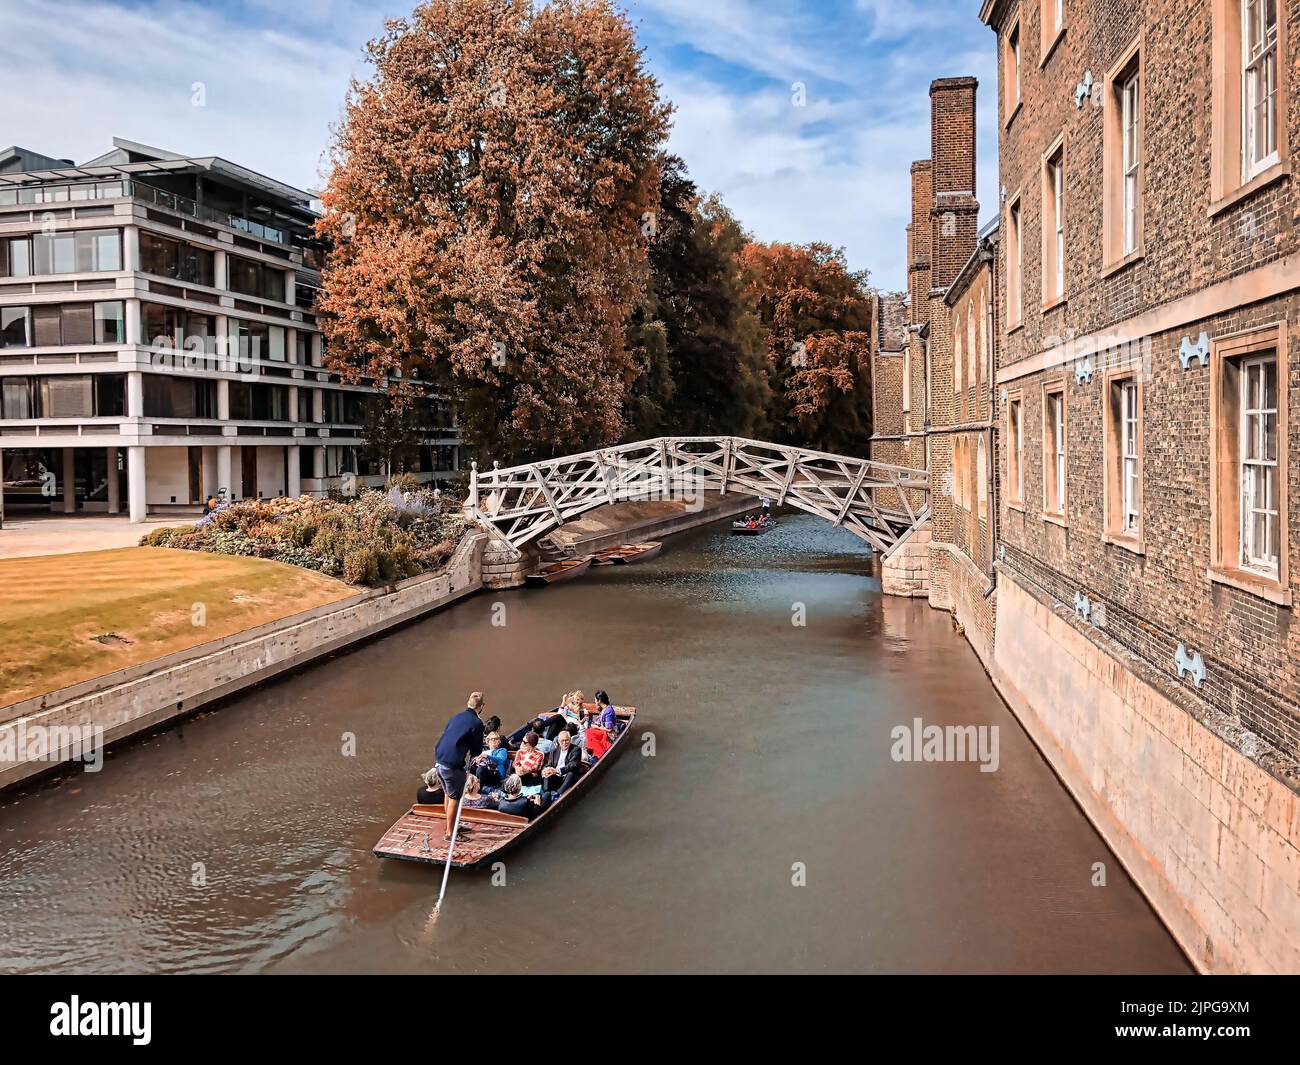 The Cambridge boat tour in a river against a scenic bridge in the United Kingdom Stock Photo